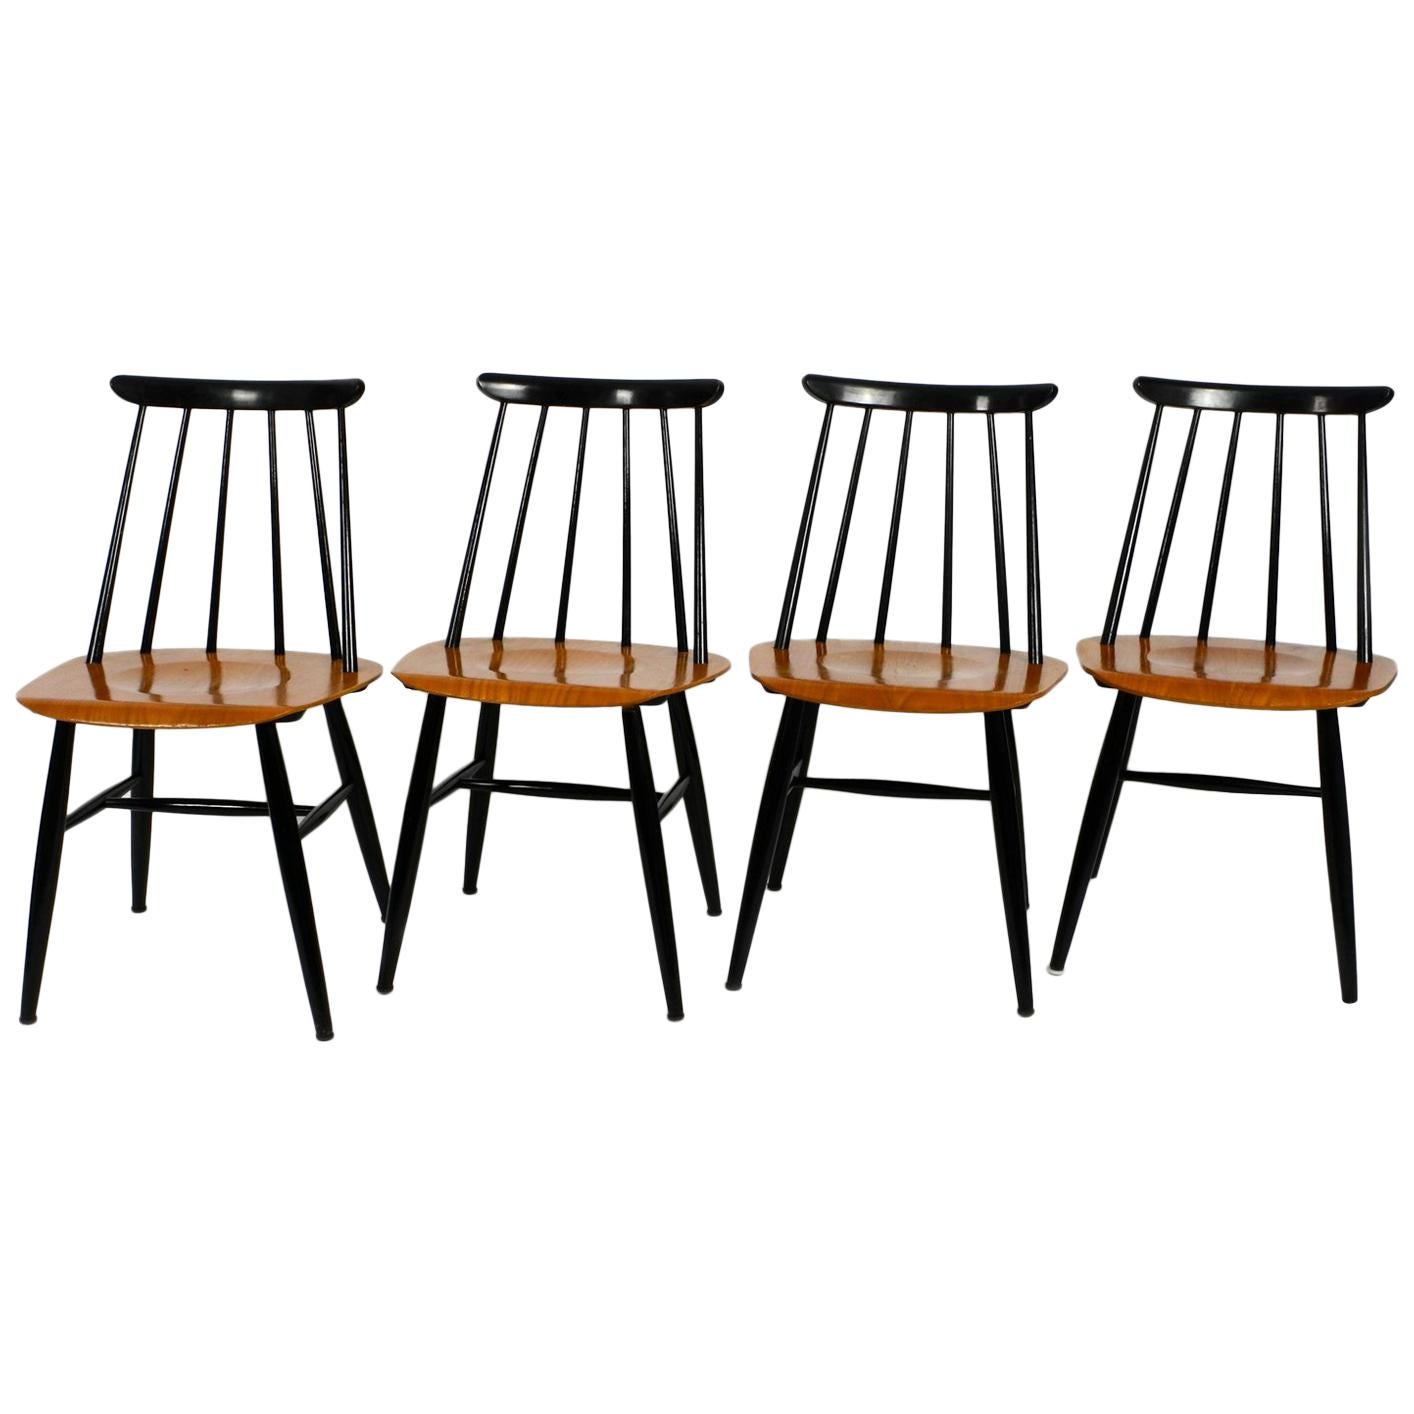 Set of 4 Original Fanett Chairs by Ilmari Tapiovaara for Asko Made in Finland